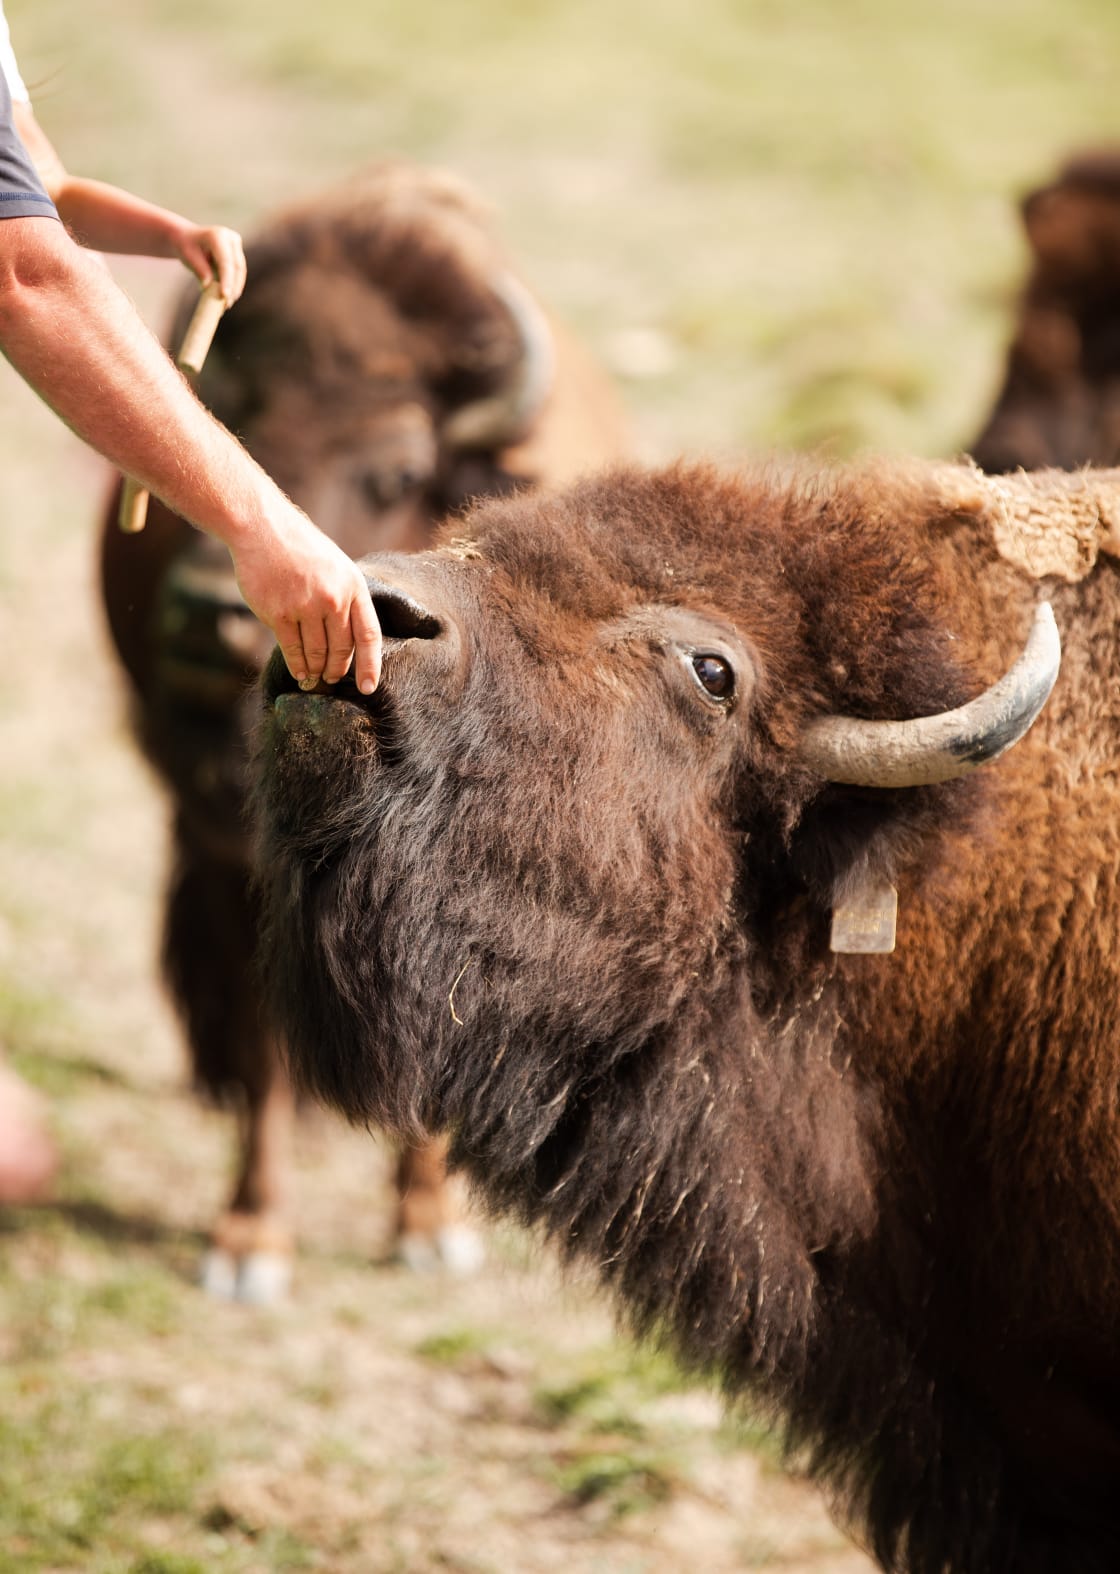 Feeding the bison!